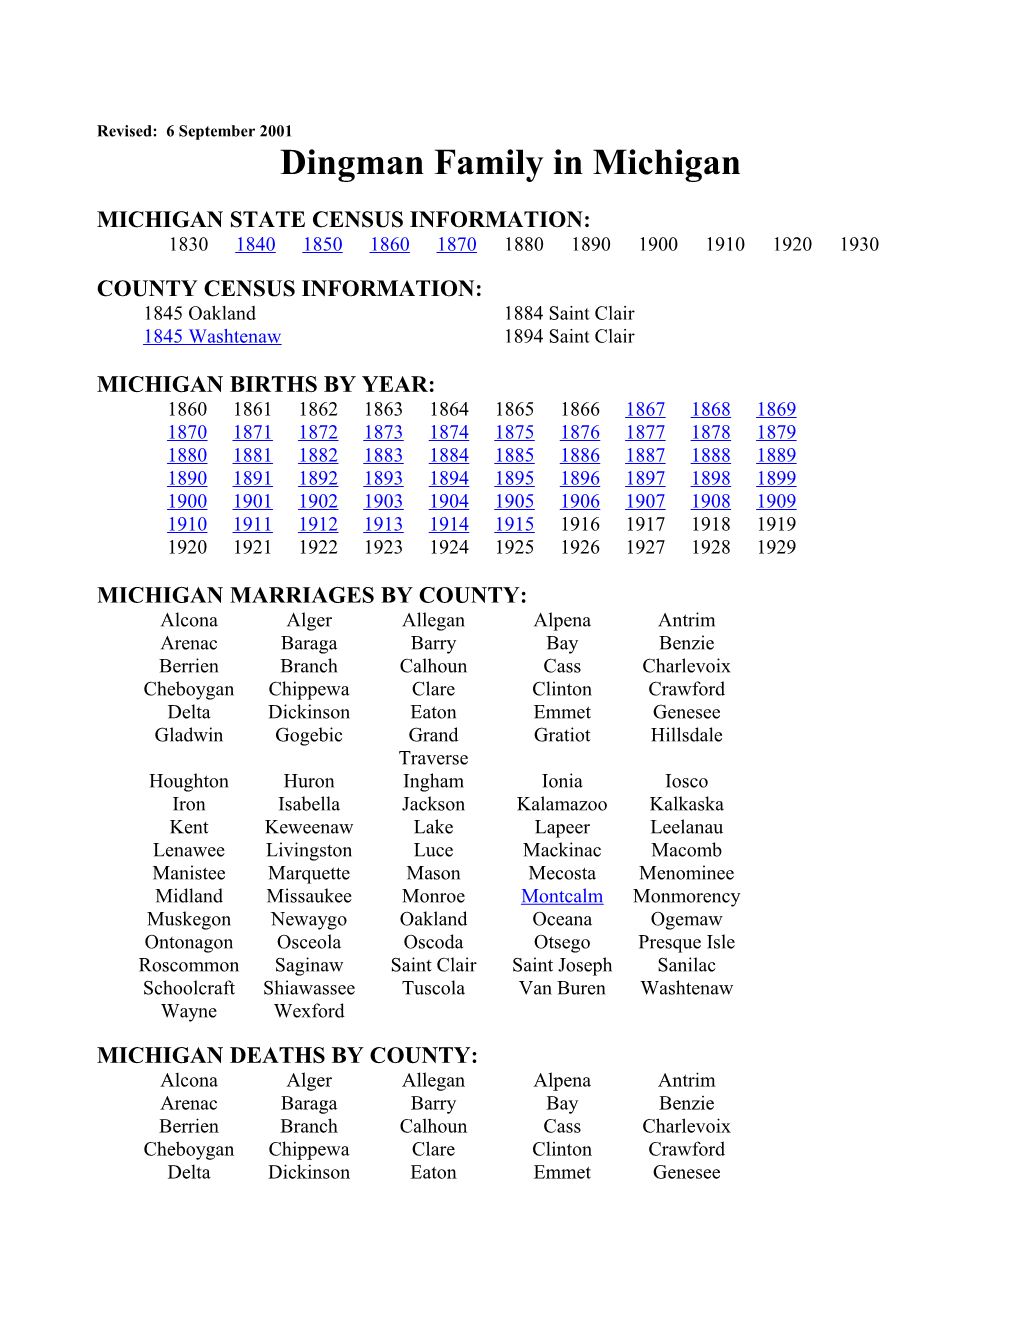 Dingman Family in Michigan